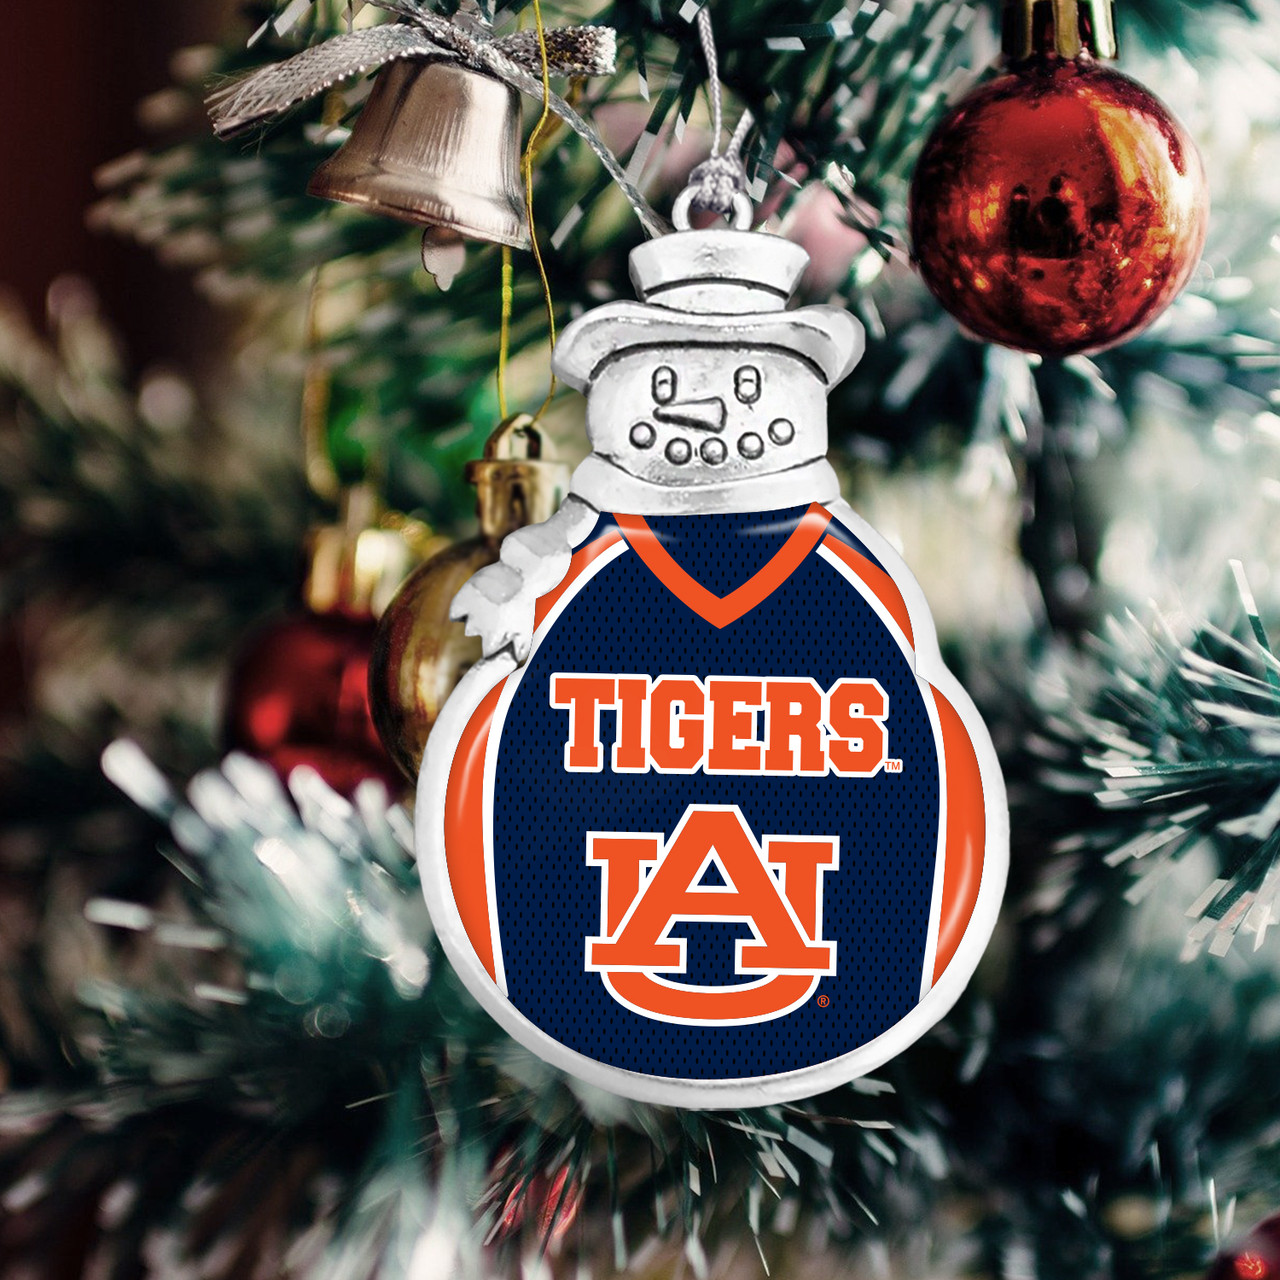 Auburn Tigers Snowman Ornament with Football Jersey